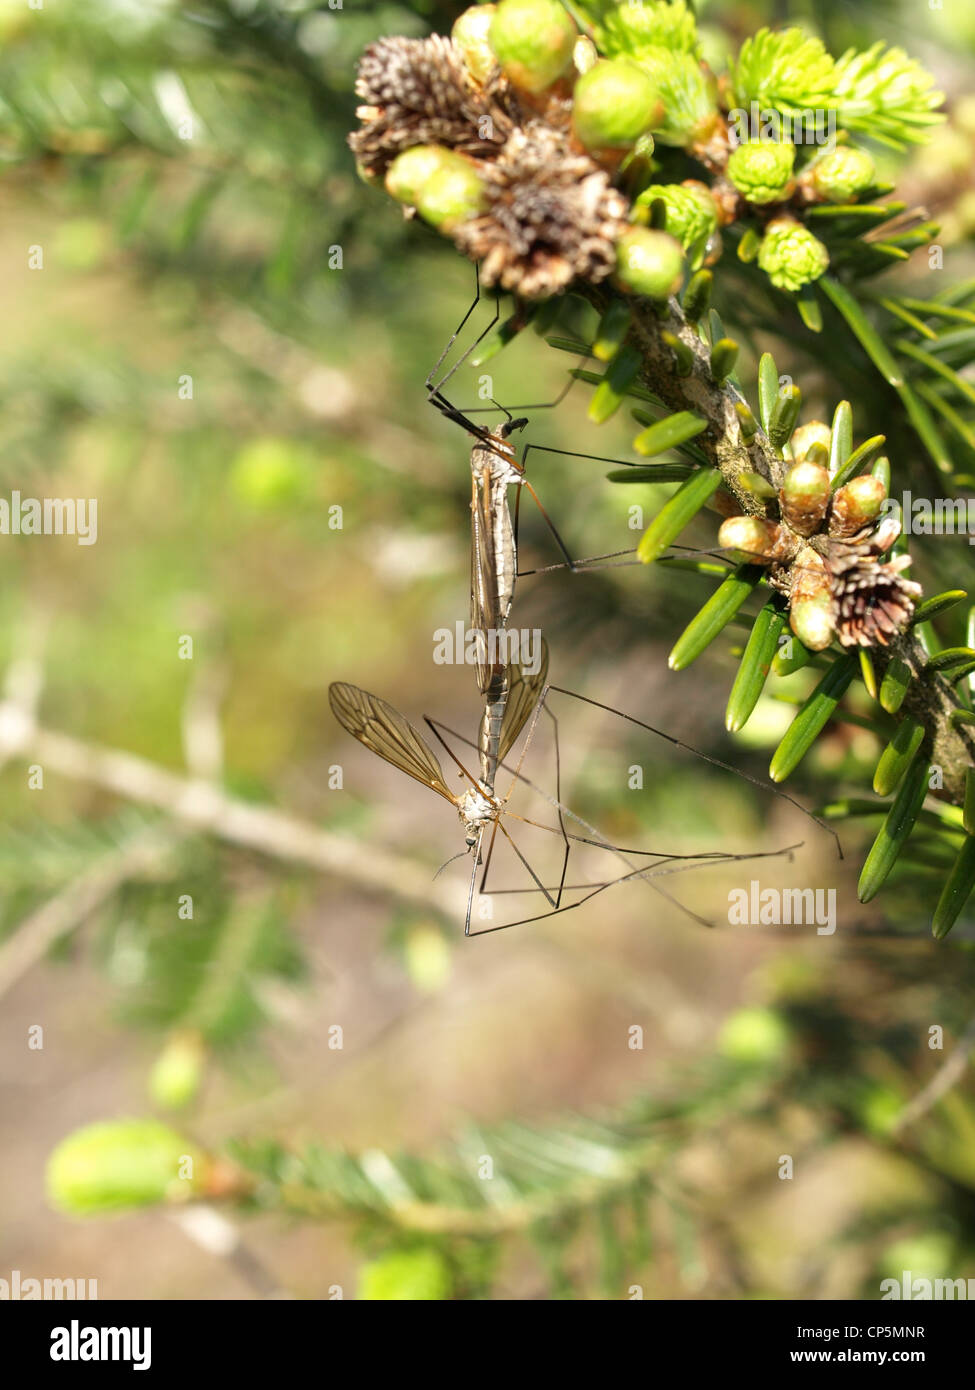 fliegende Insekten Paarung / Fluginsekten Paarung Stockfoto